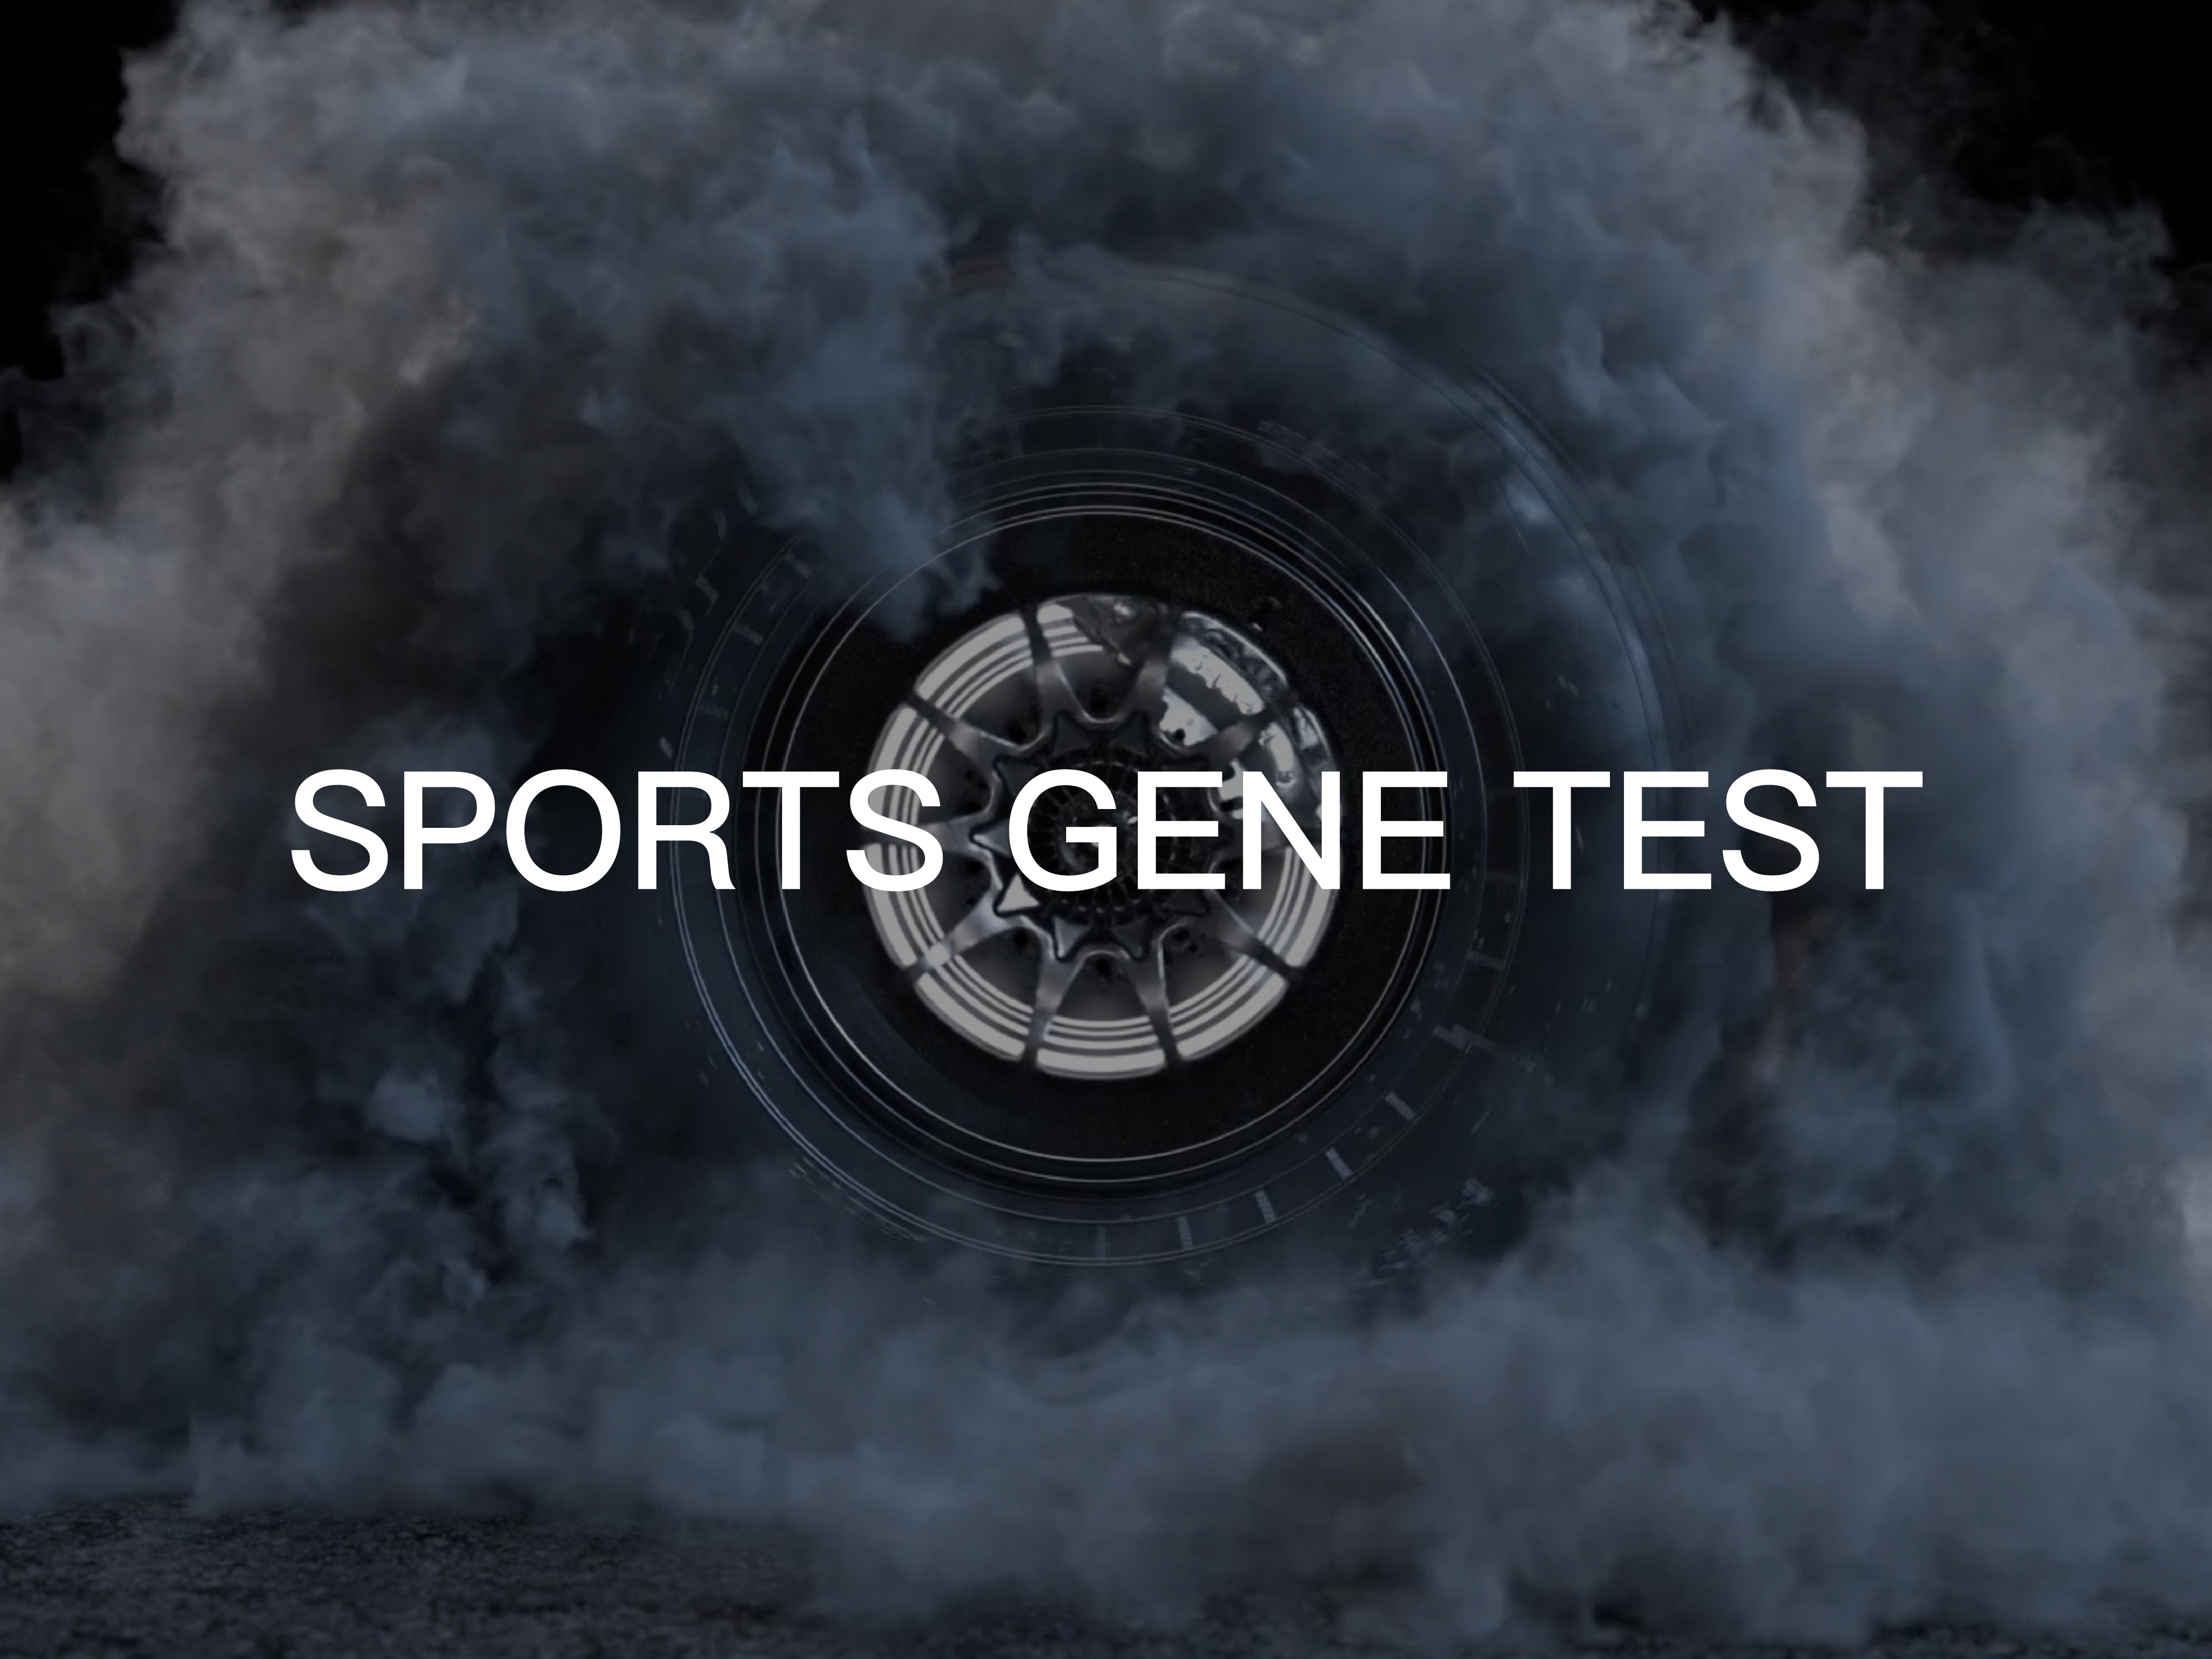 Sports gene test publicity video